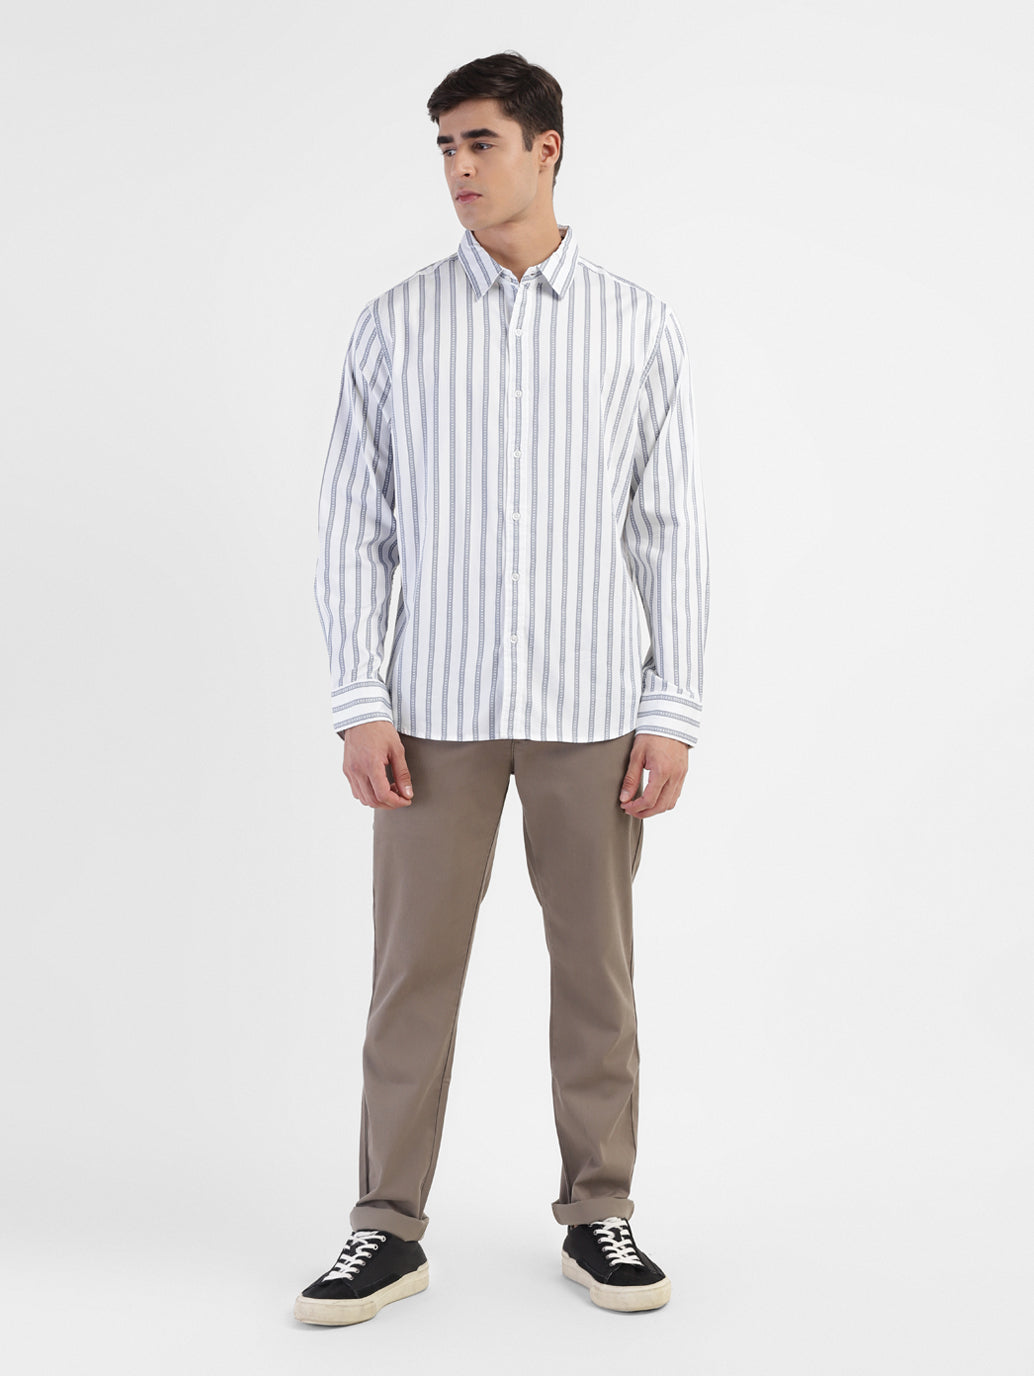 Men's Striped Spread Collar Shirt White